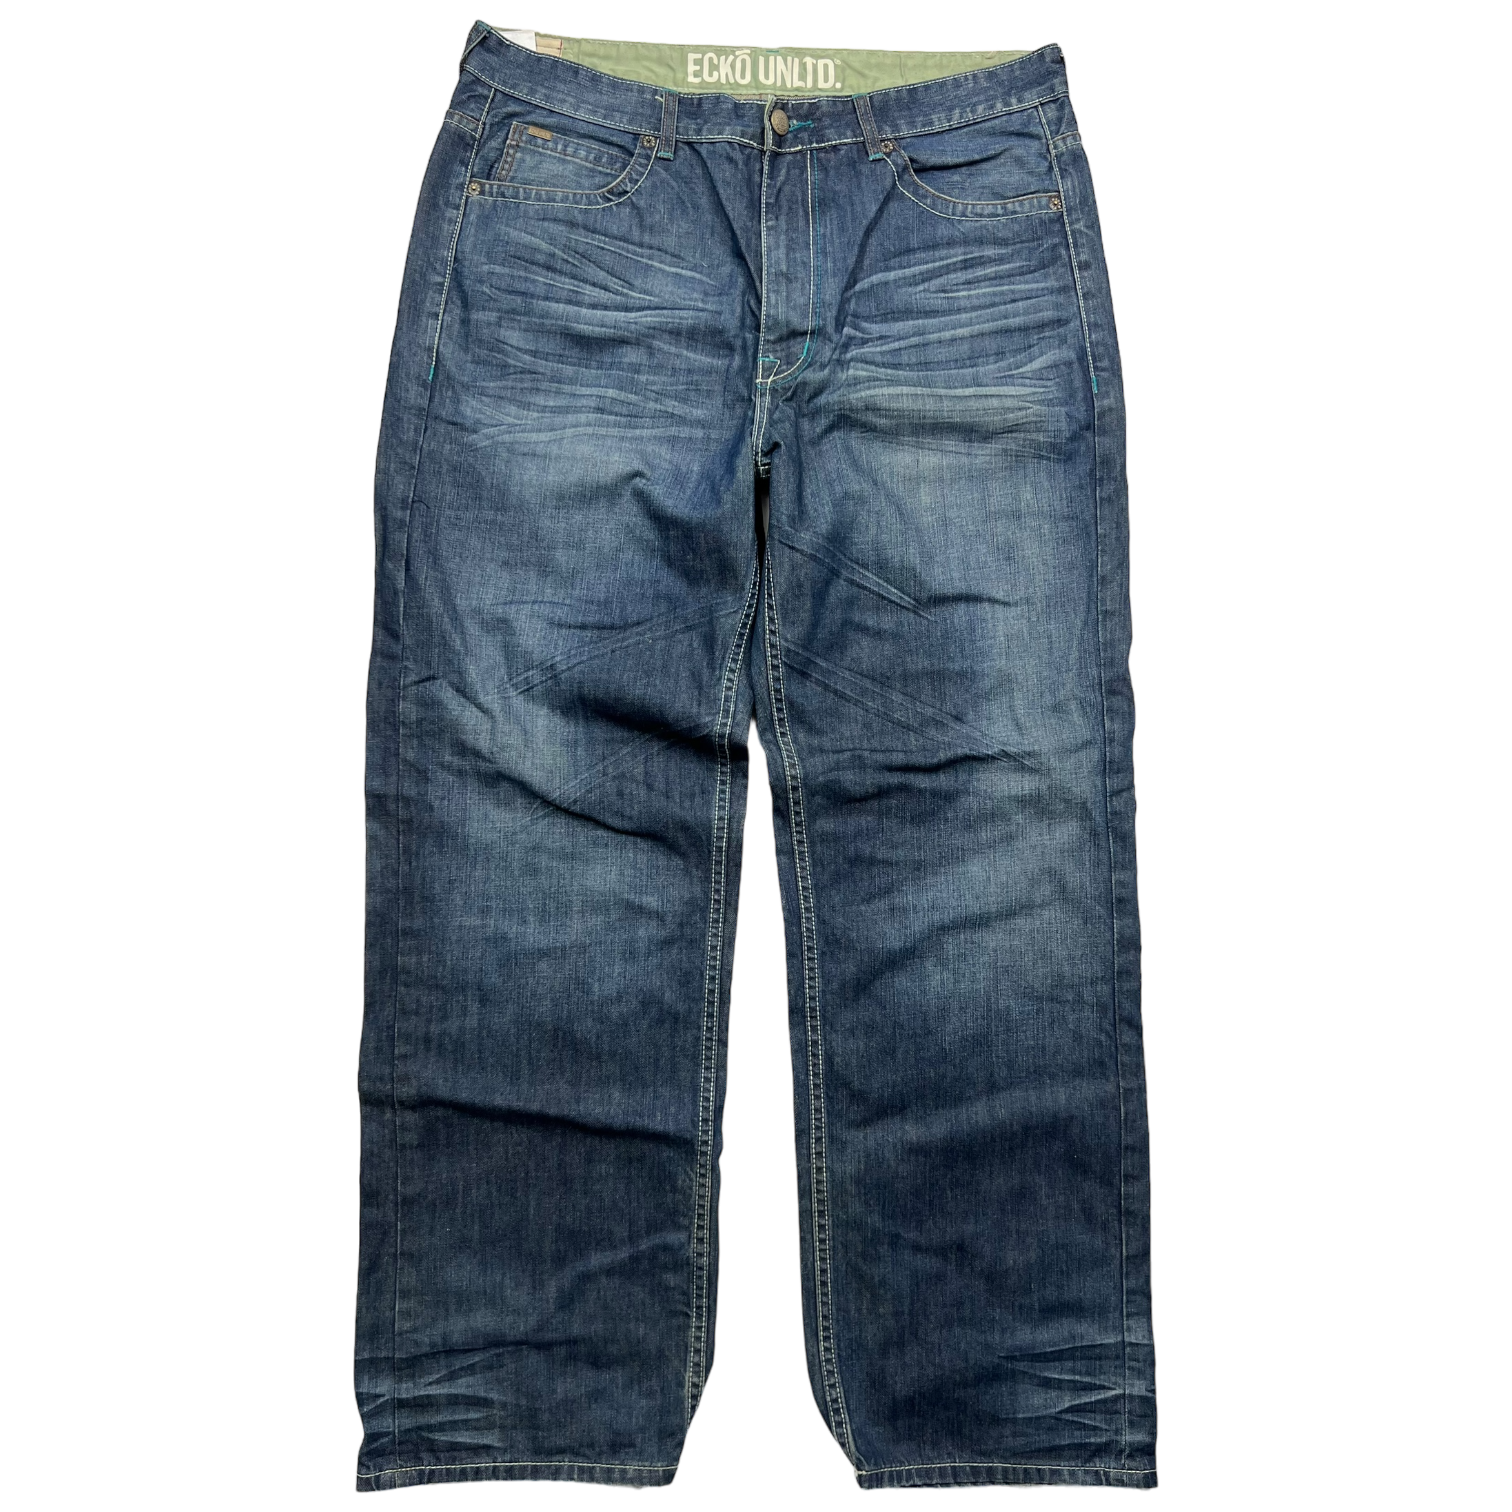 Ecko Untld. Jeans (38)